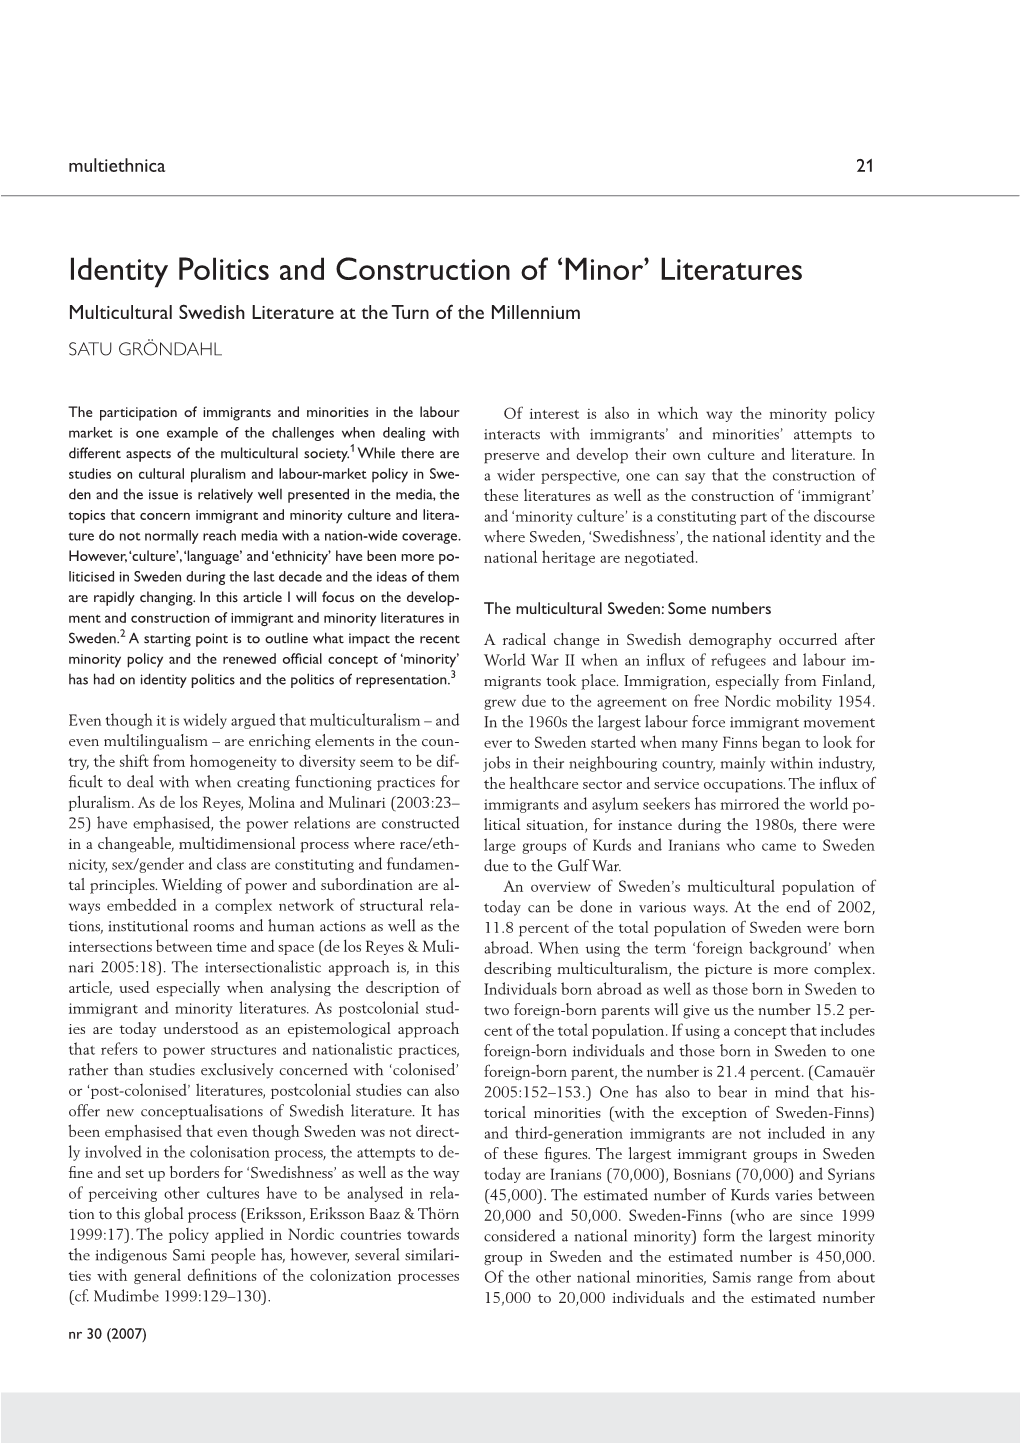 Identity Politics and Construction of 'Minor' Literatures